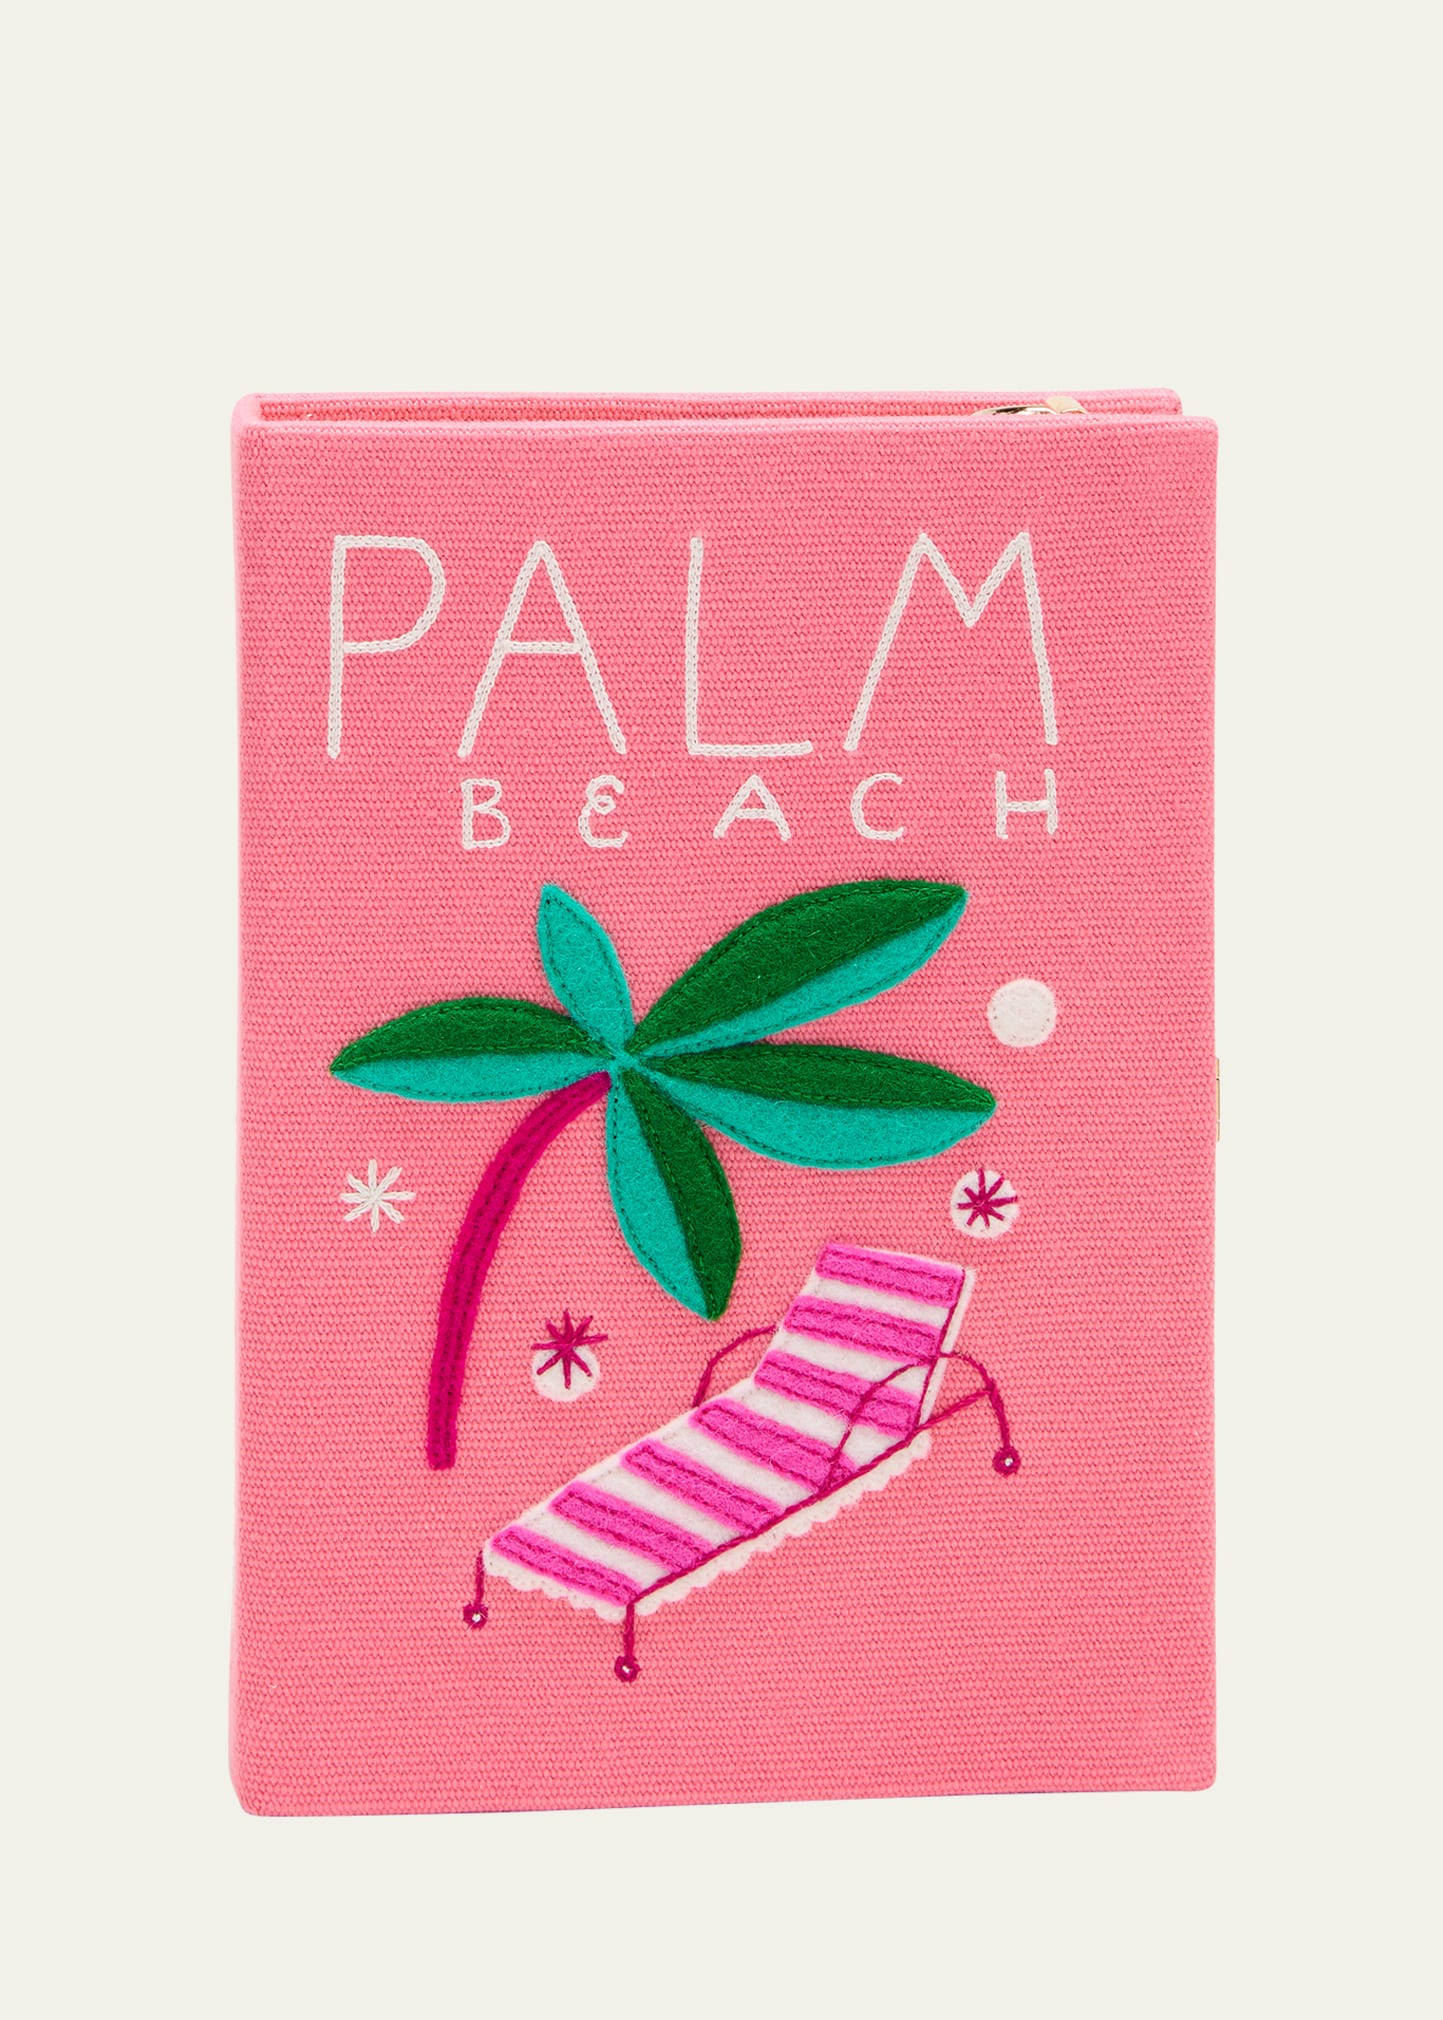 Palm Beach Book Clutch Bag